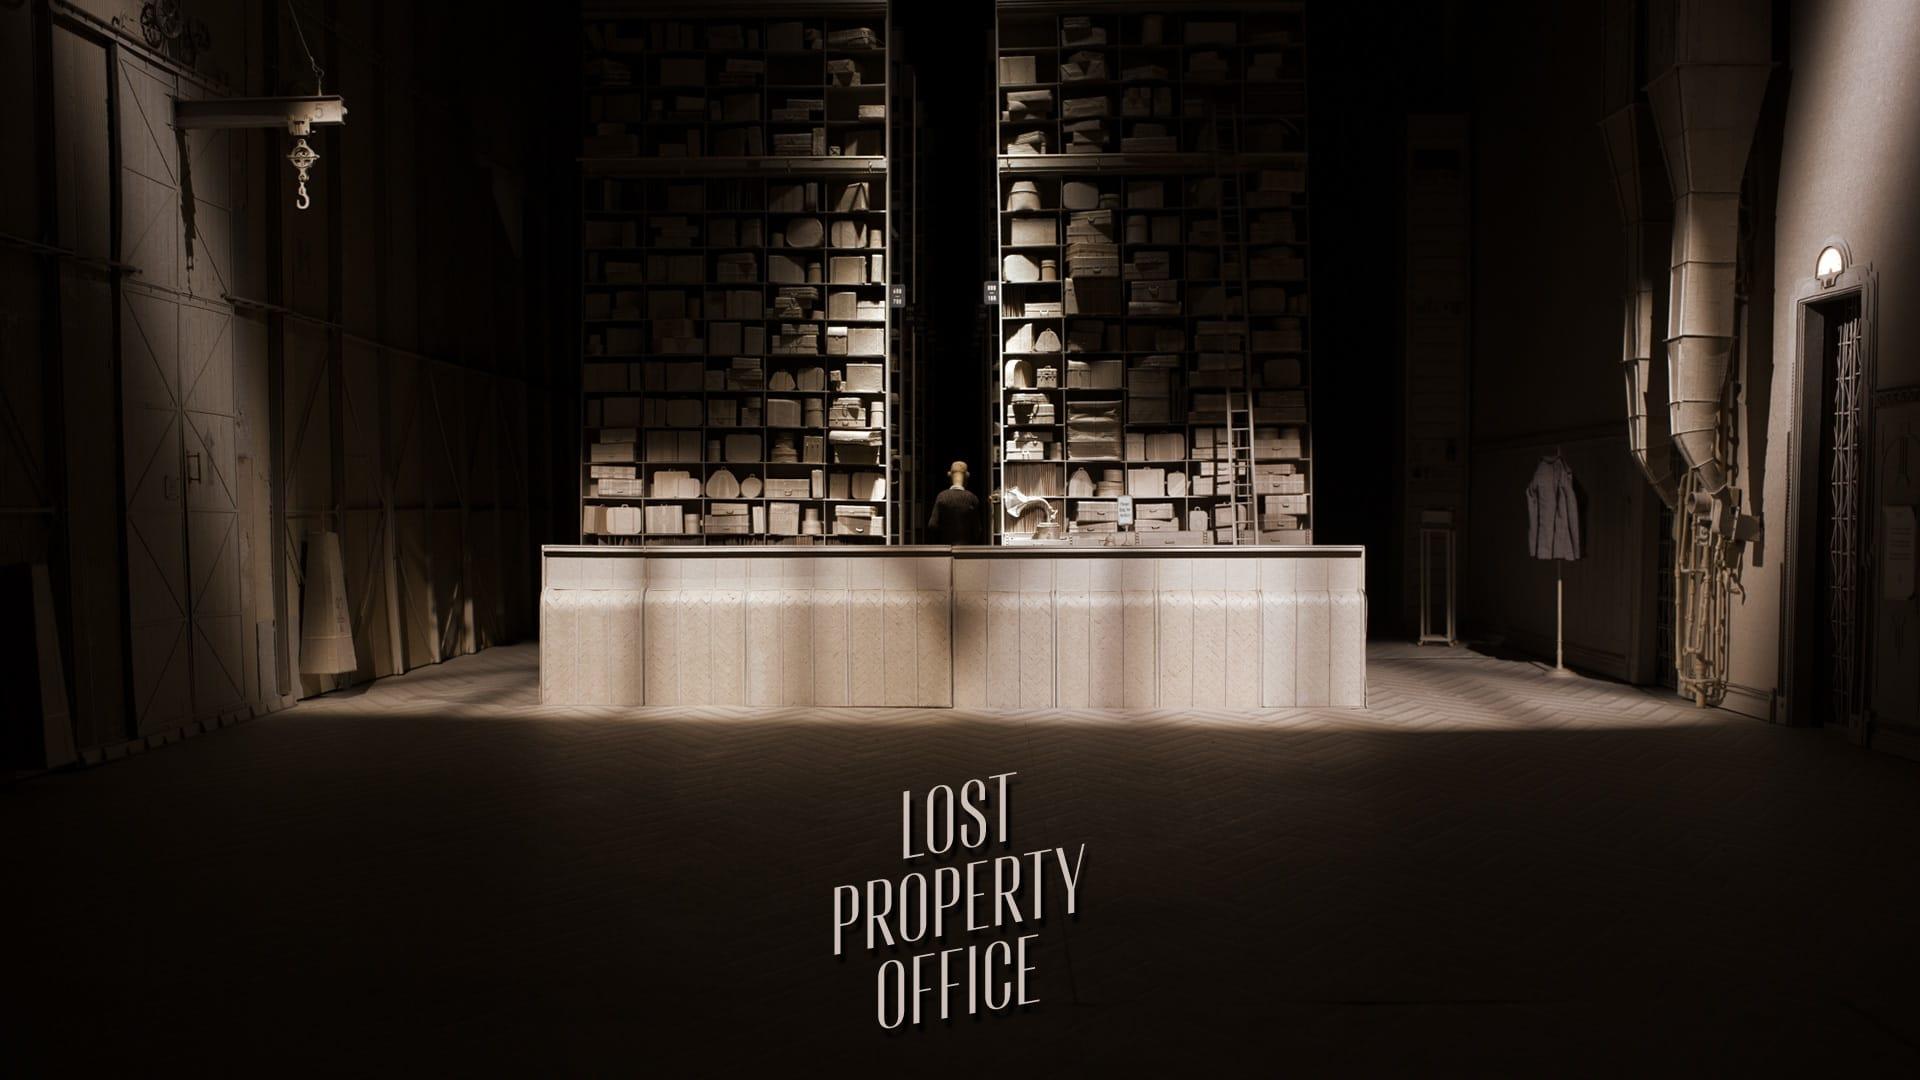 Lost Property Office backdrop